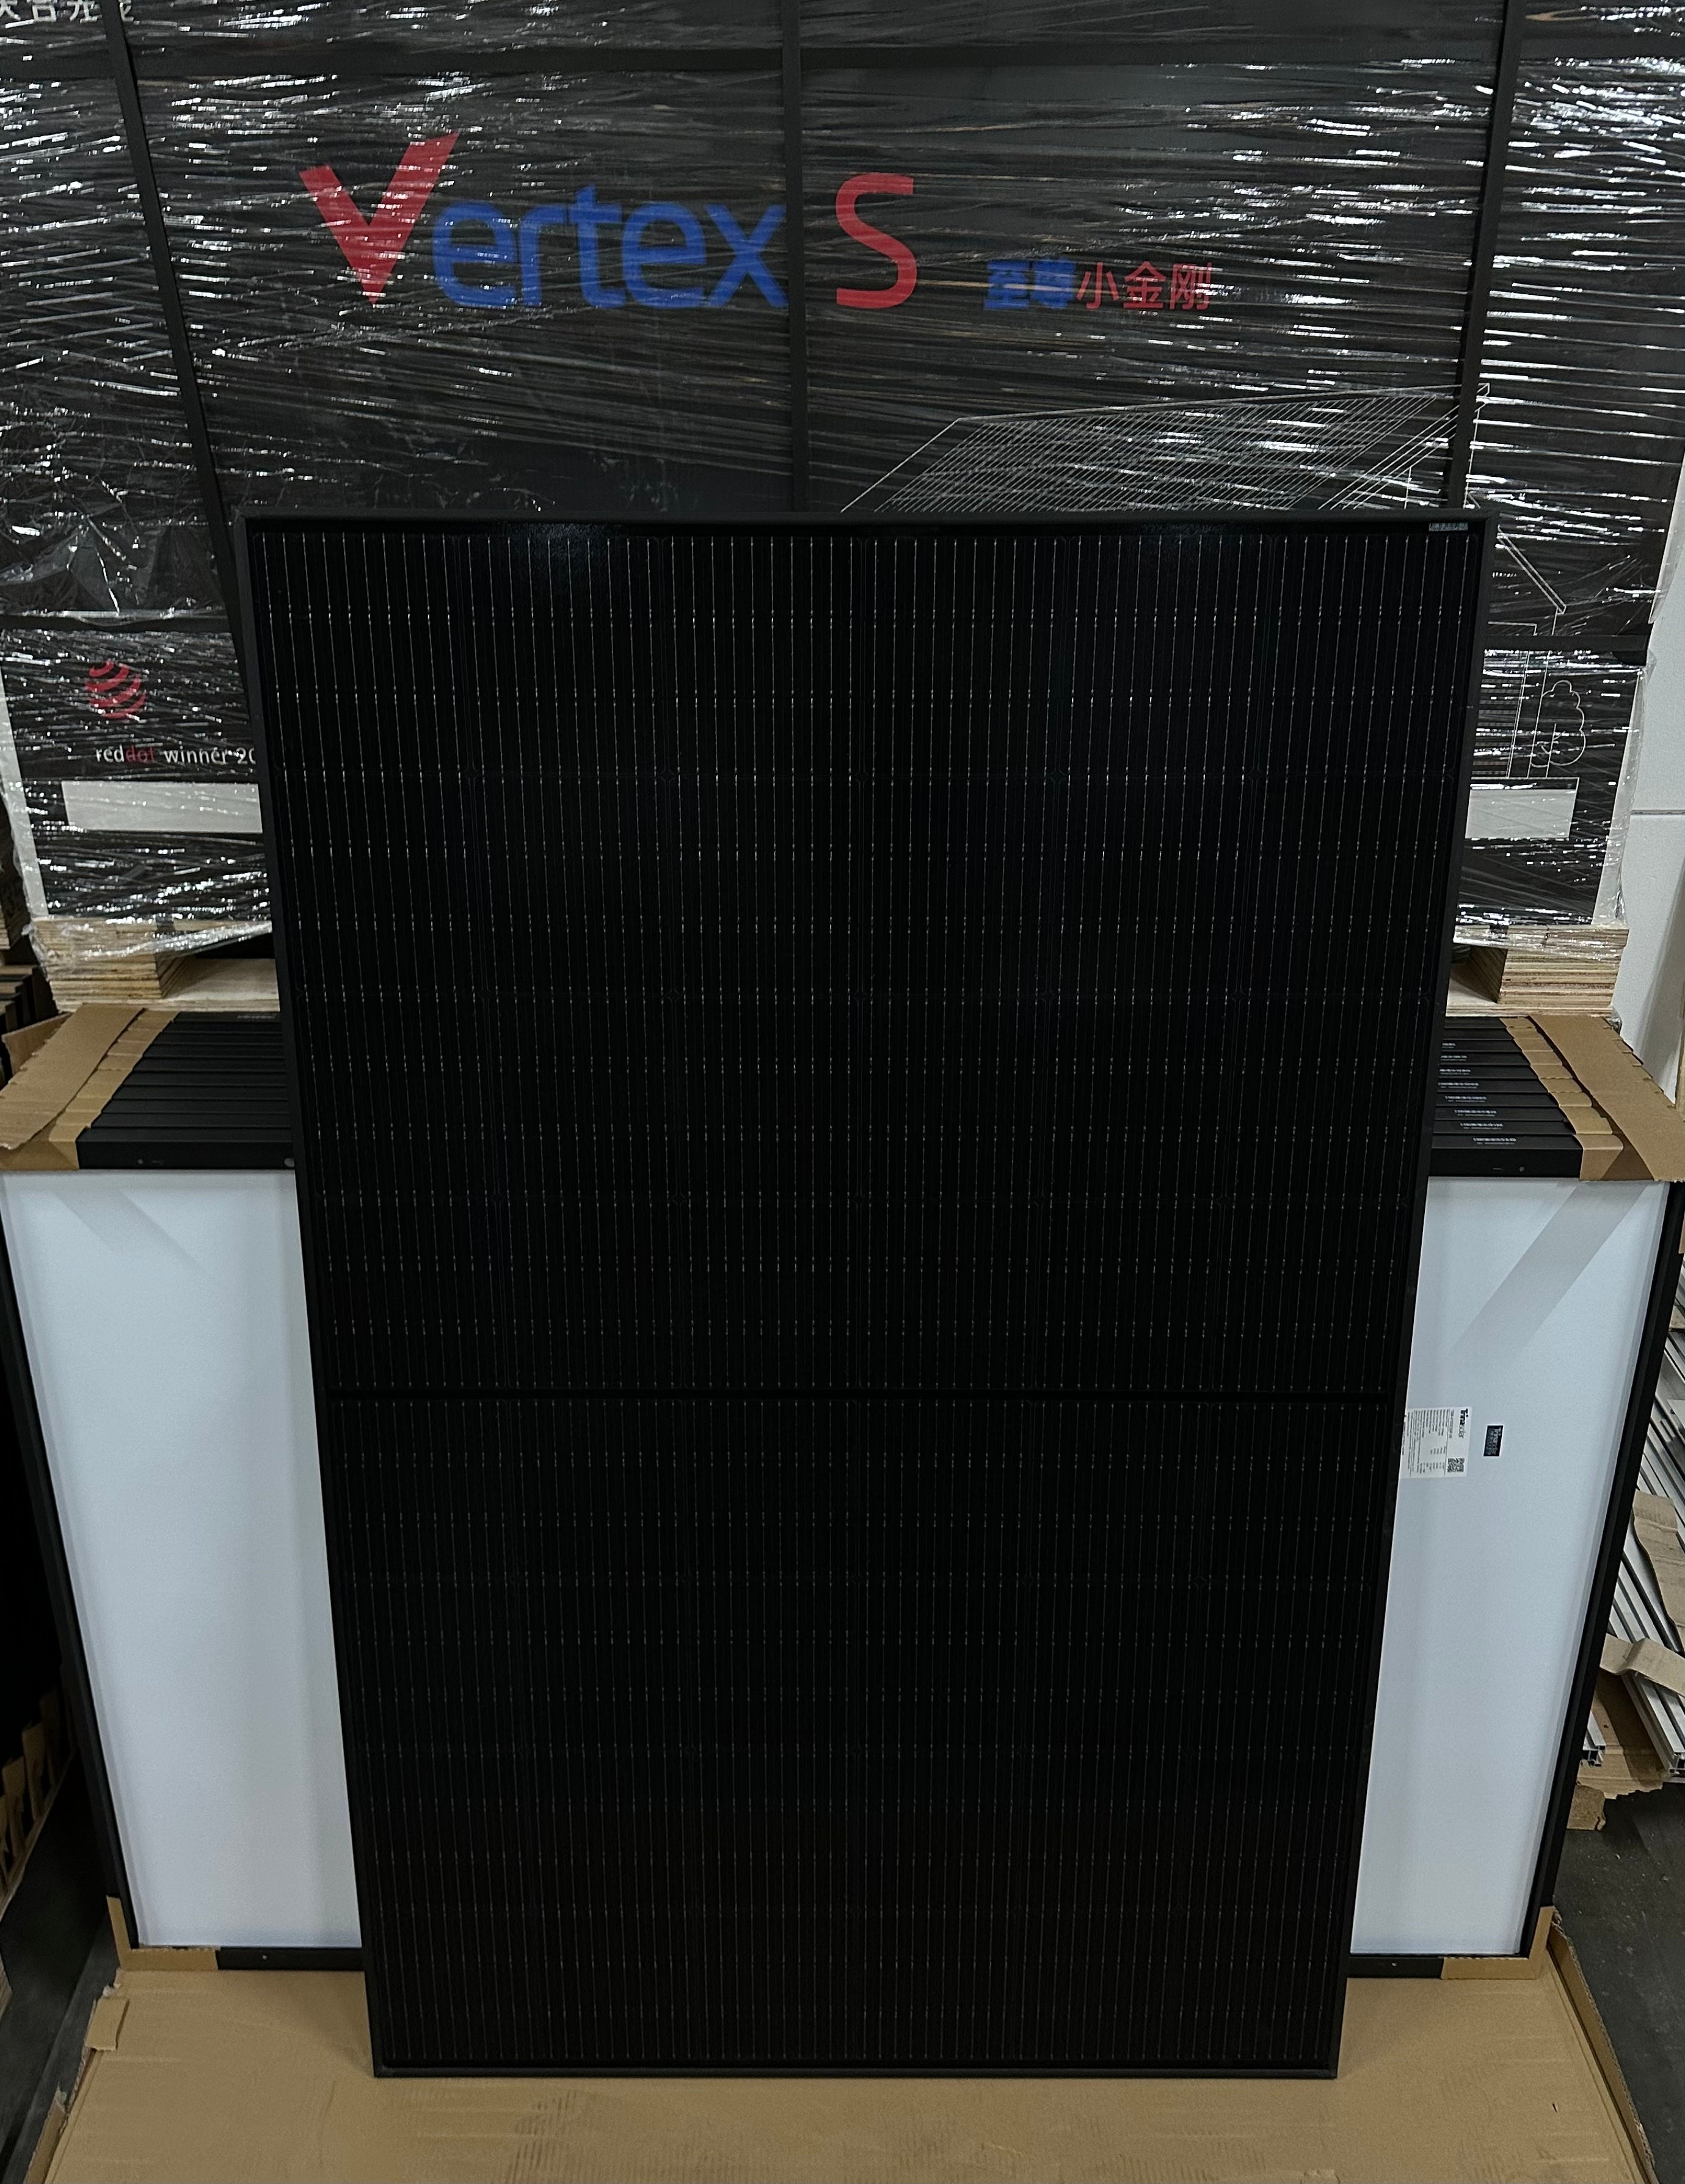 415W Trina Vertex S Full Black solar modules 1762x1134x30 mm solar panel photovoltaic 